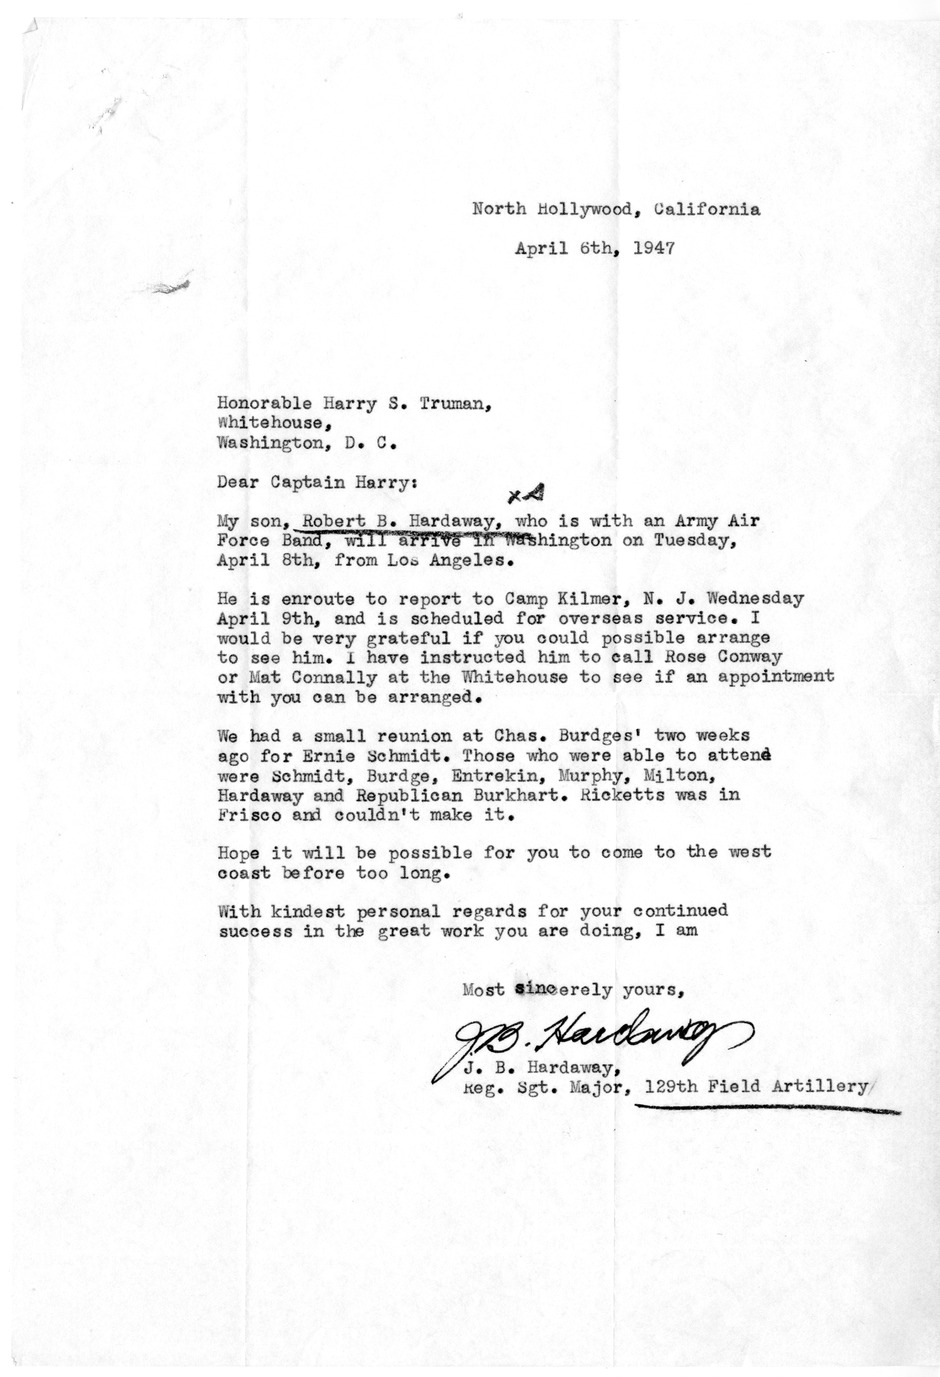 Correspondence Between President Harry S. Truman and Joseph B. Hardaway